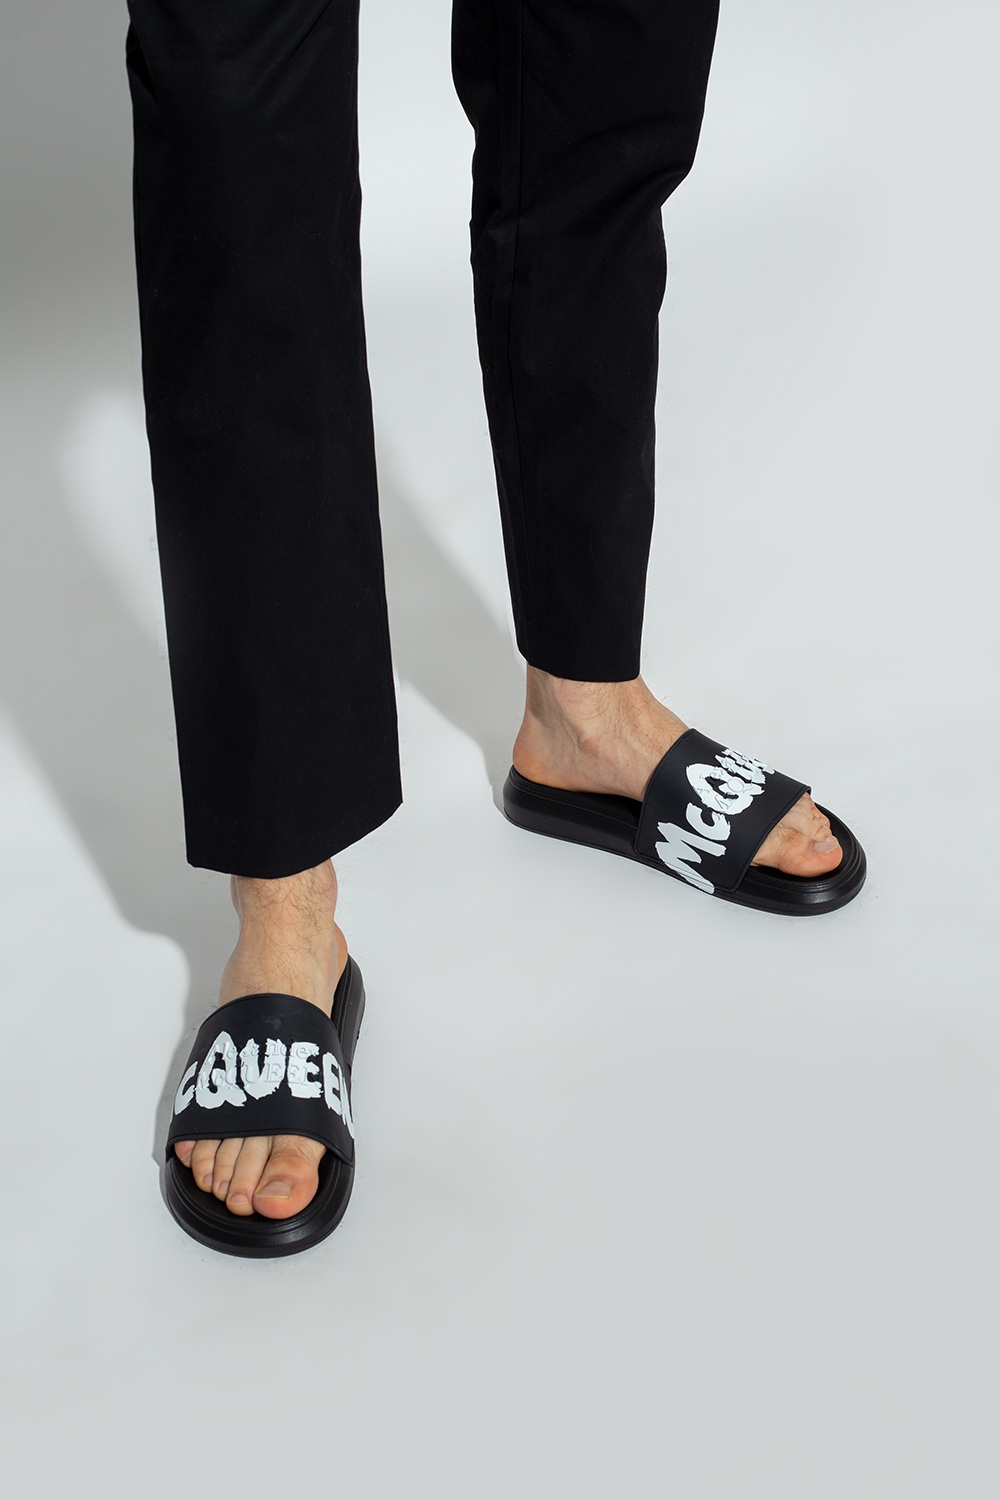 Alexander McQueen Rubber slides | Men's Shoes | Vitkac